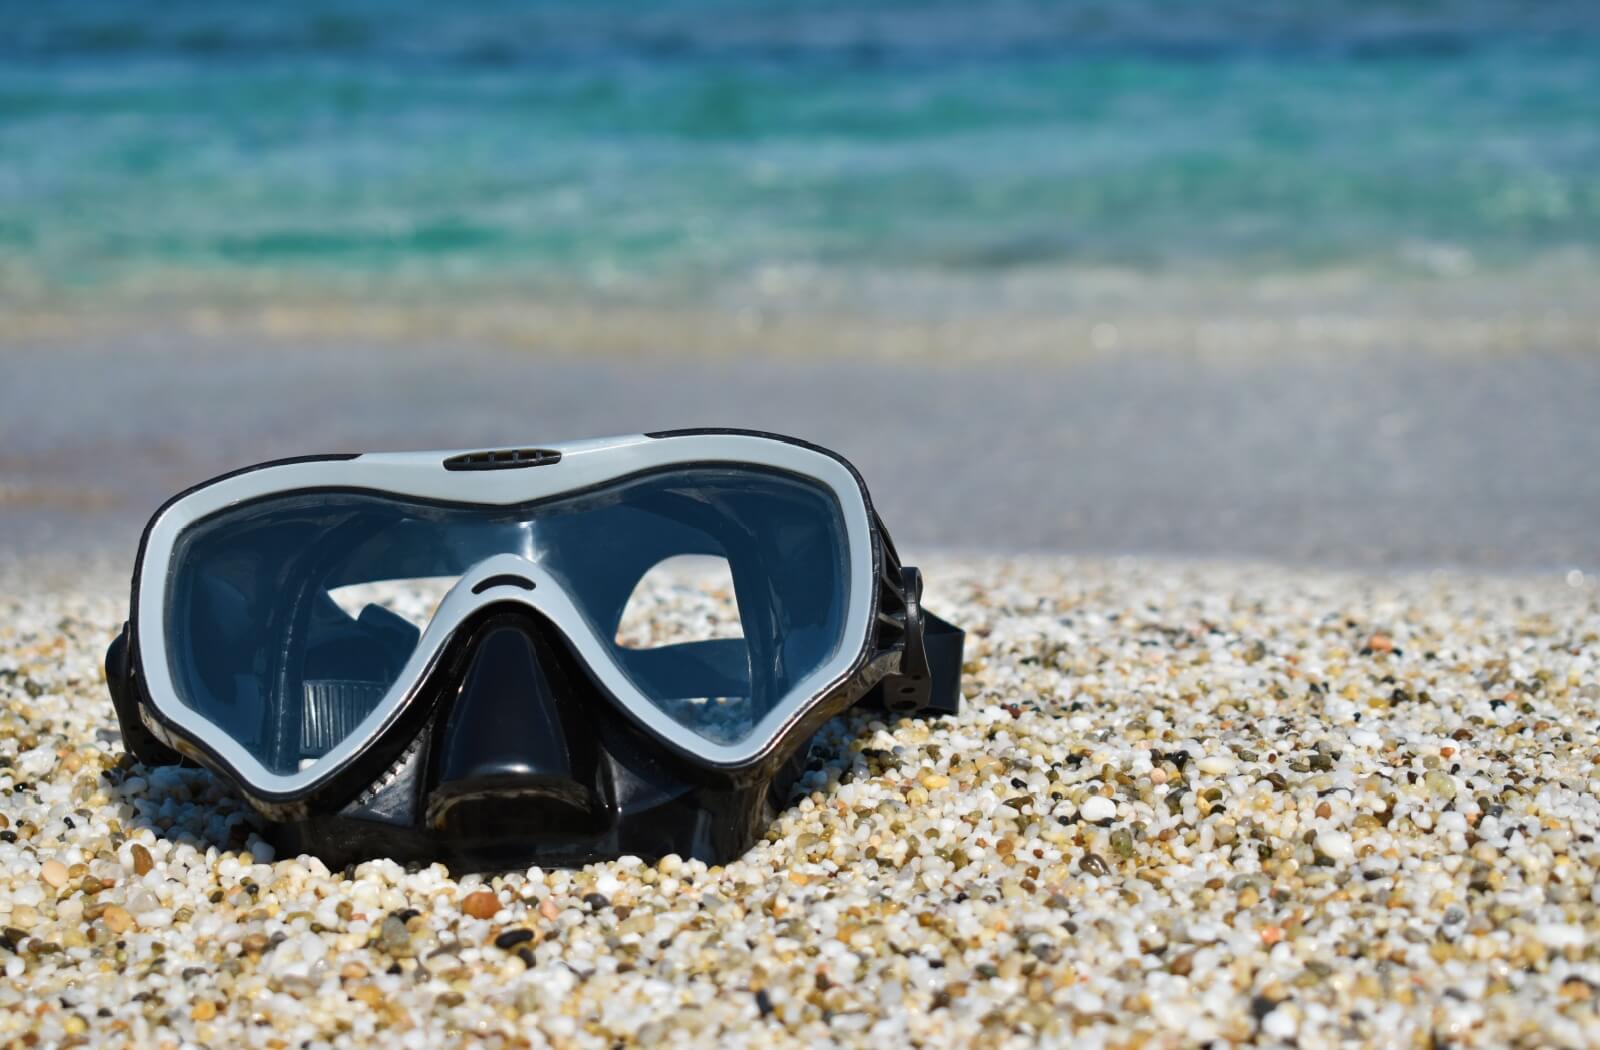 A close-up of a  scuba diving mask on a sandy shore.